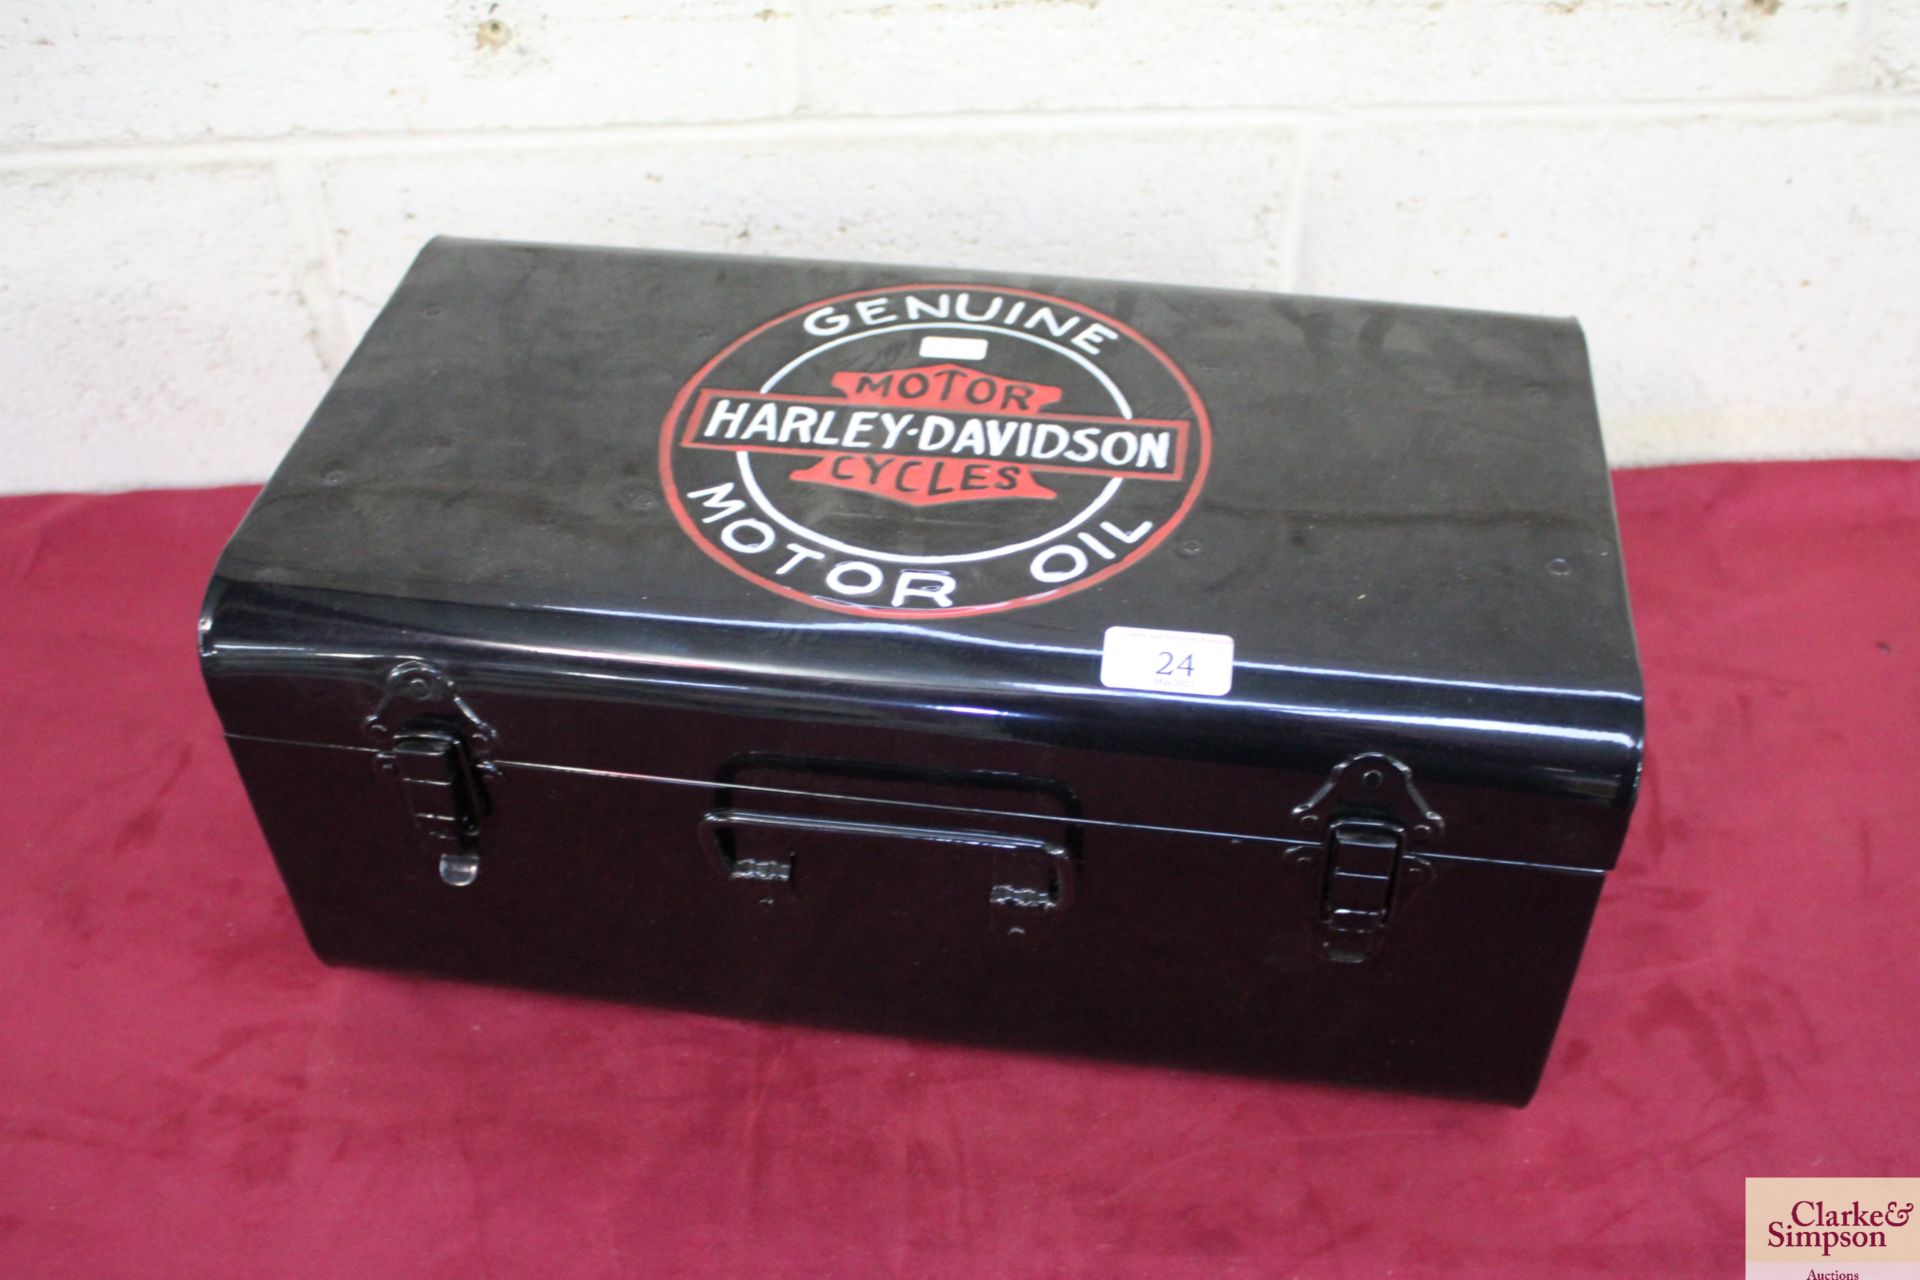 Harley Davidson toolbox. V